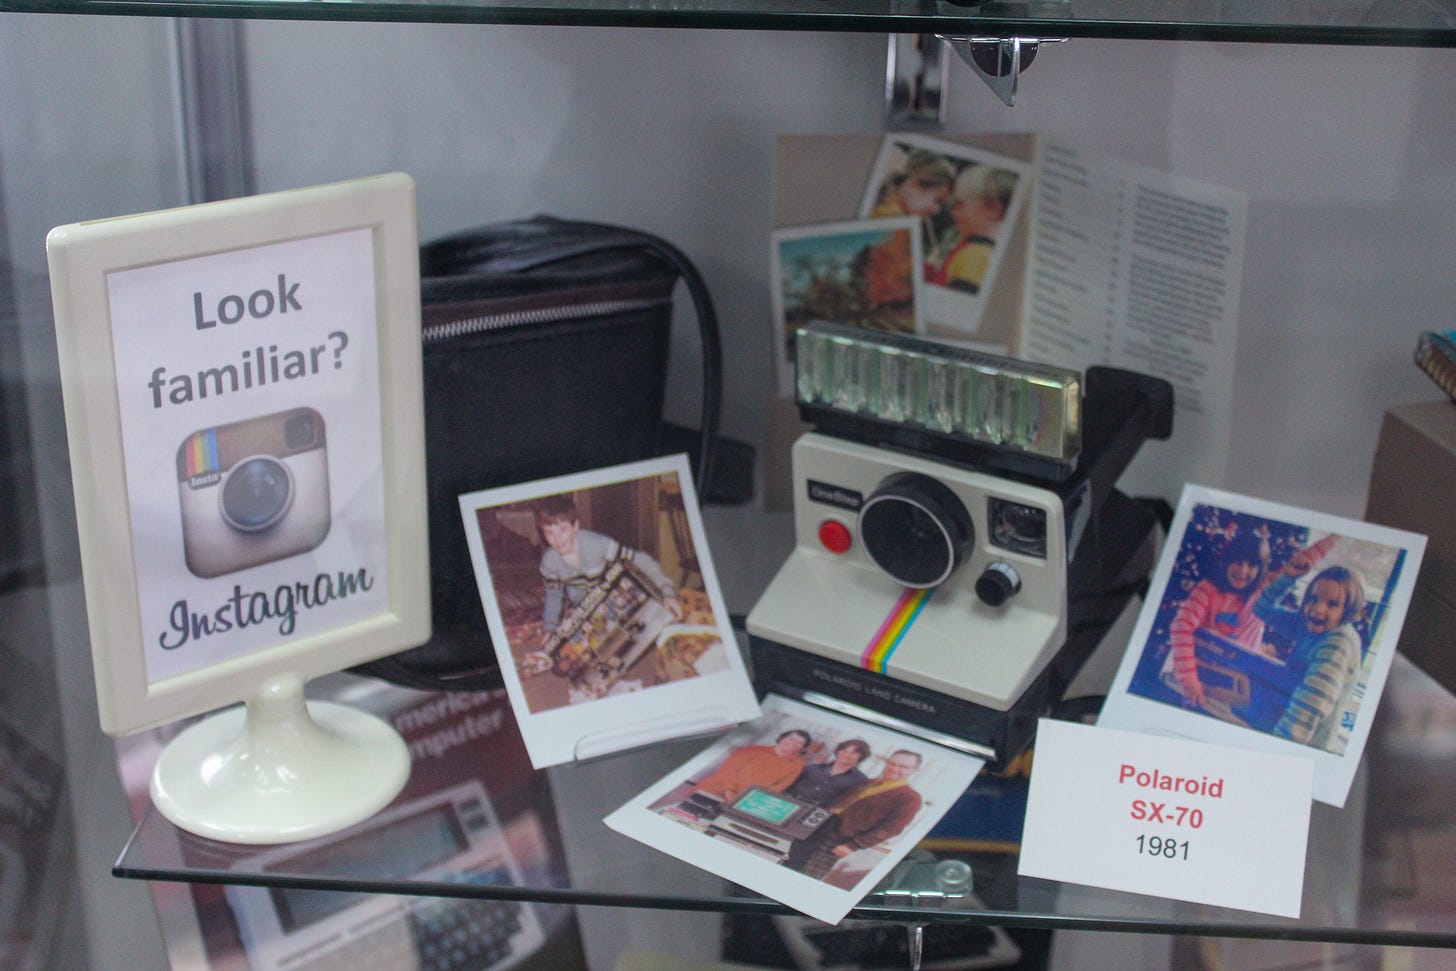 A Polaroid camera and Polaroid prints inside a glass display case